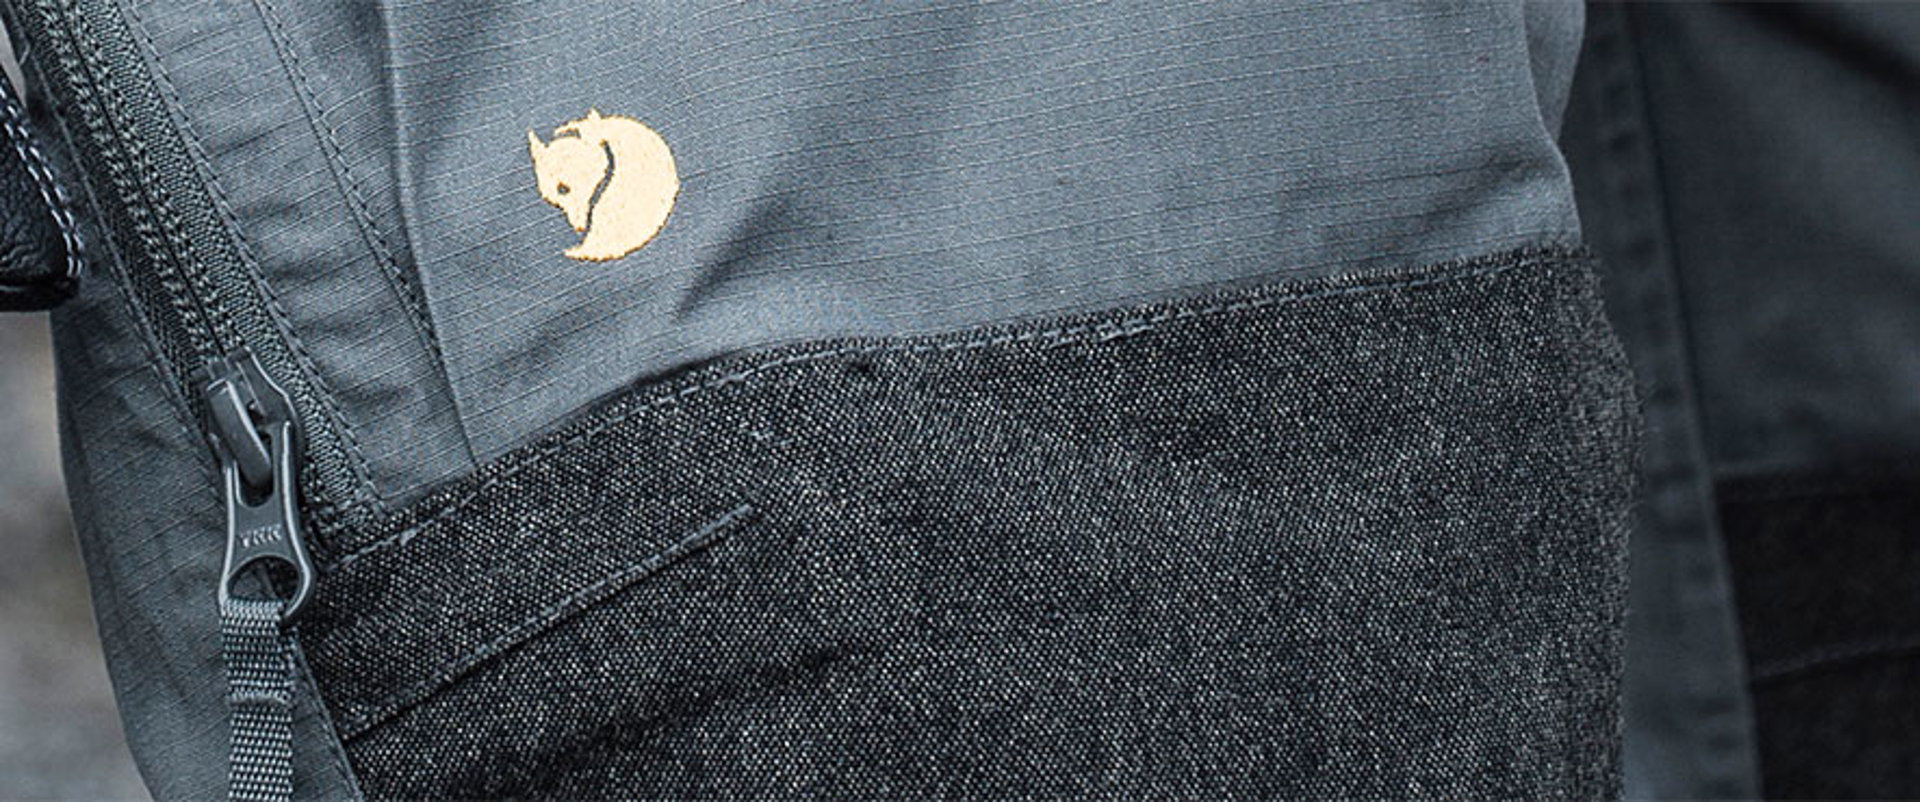 Closeup of leg zipper on pants